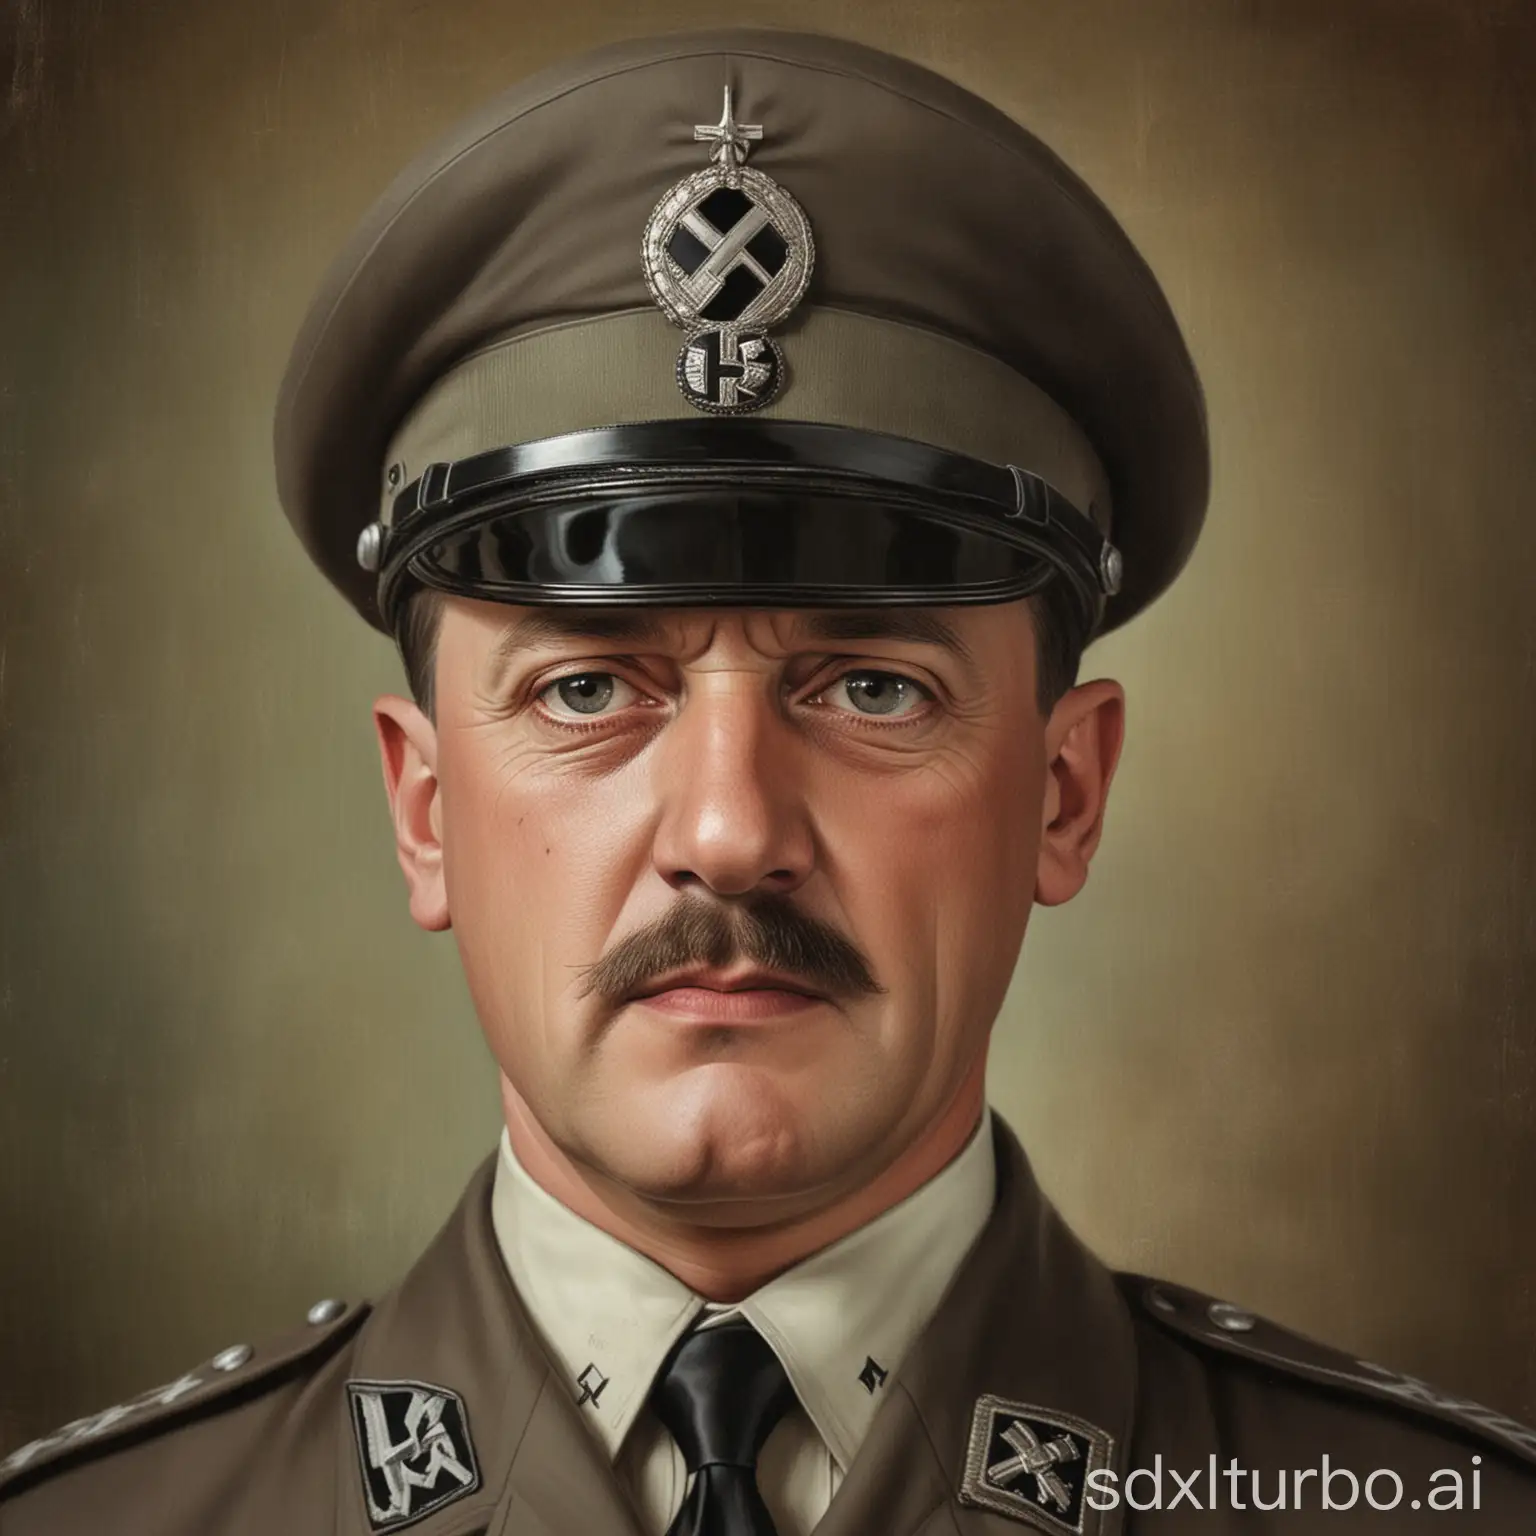 Controversial-Figure-Adolf-Hitler-Portrayed-in-Digital-Art